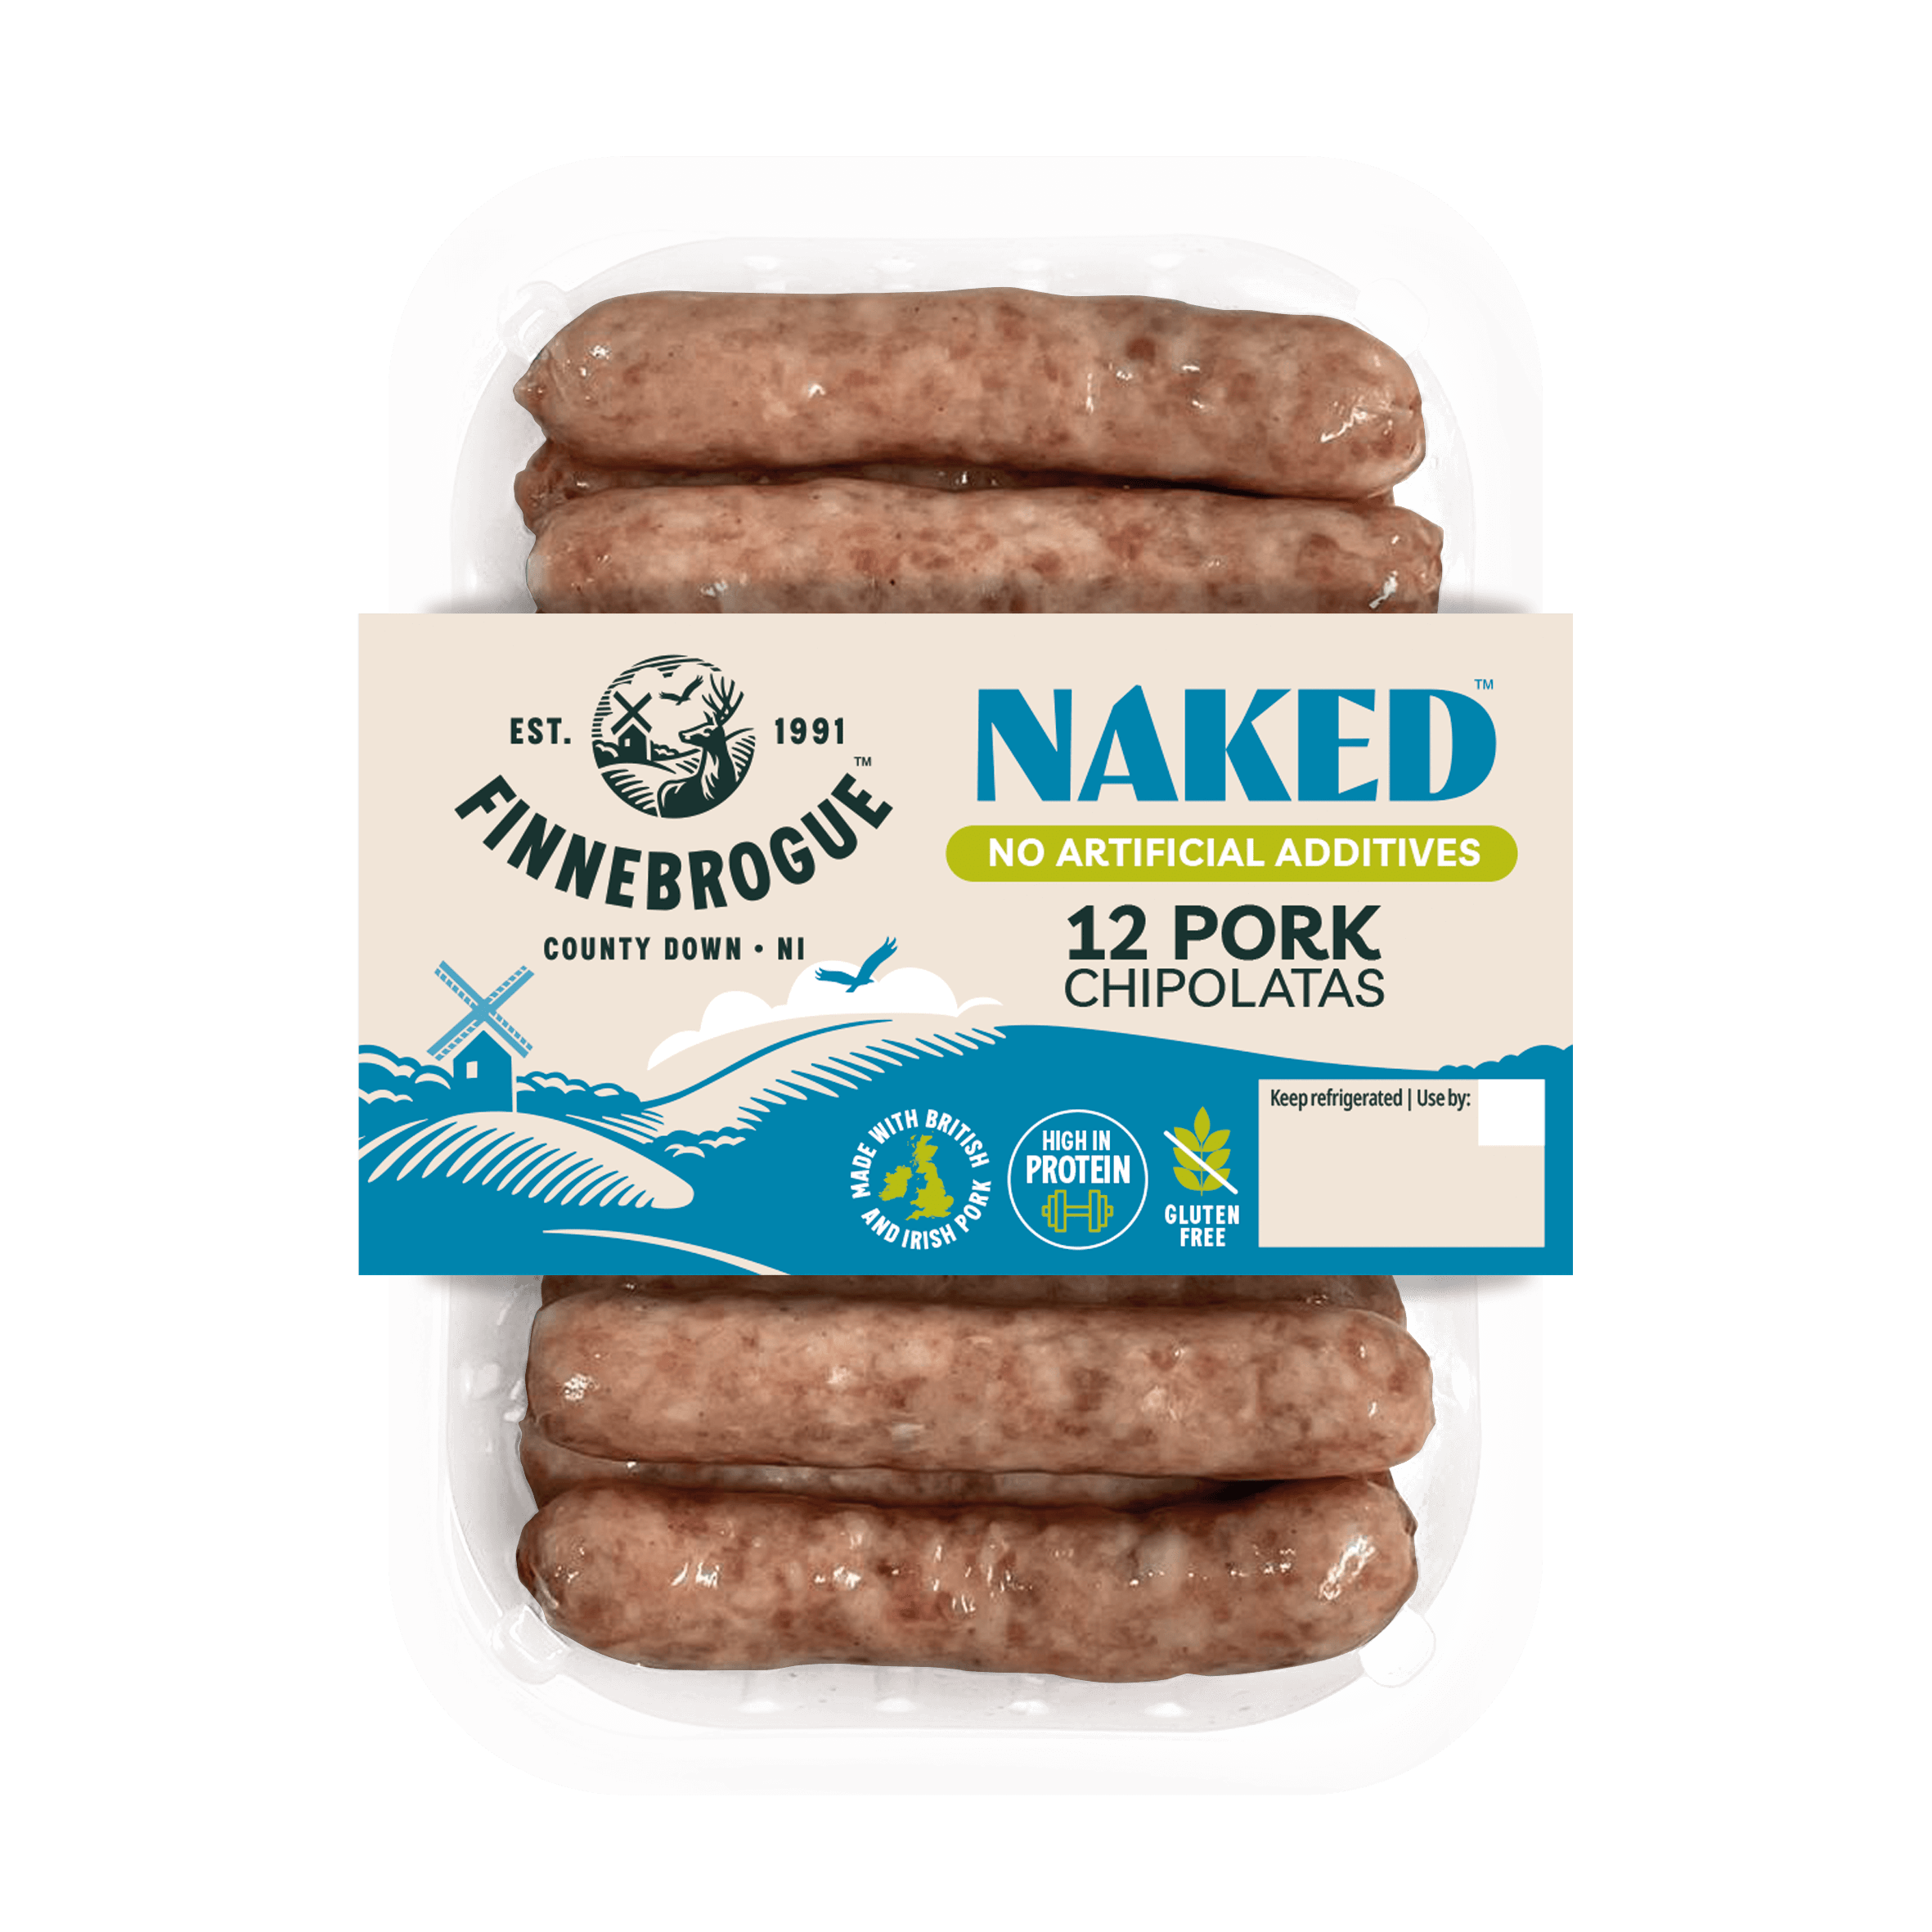 Finnebrogue Naked Pork Chipolatas